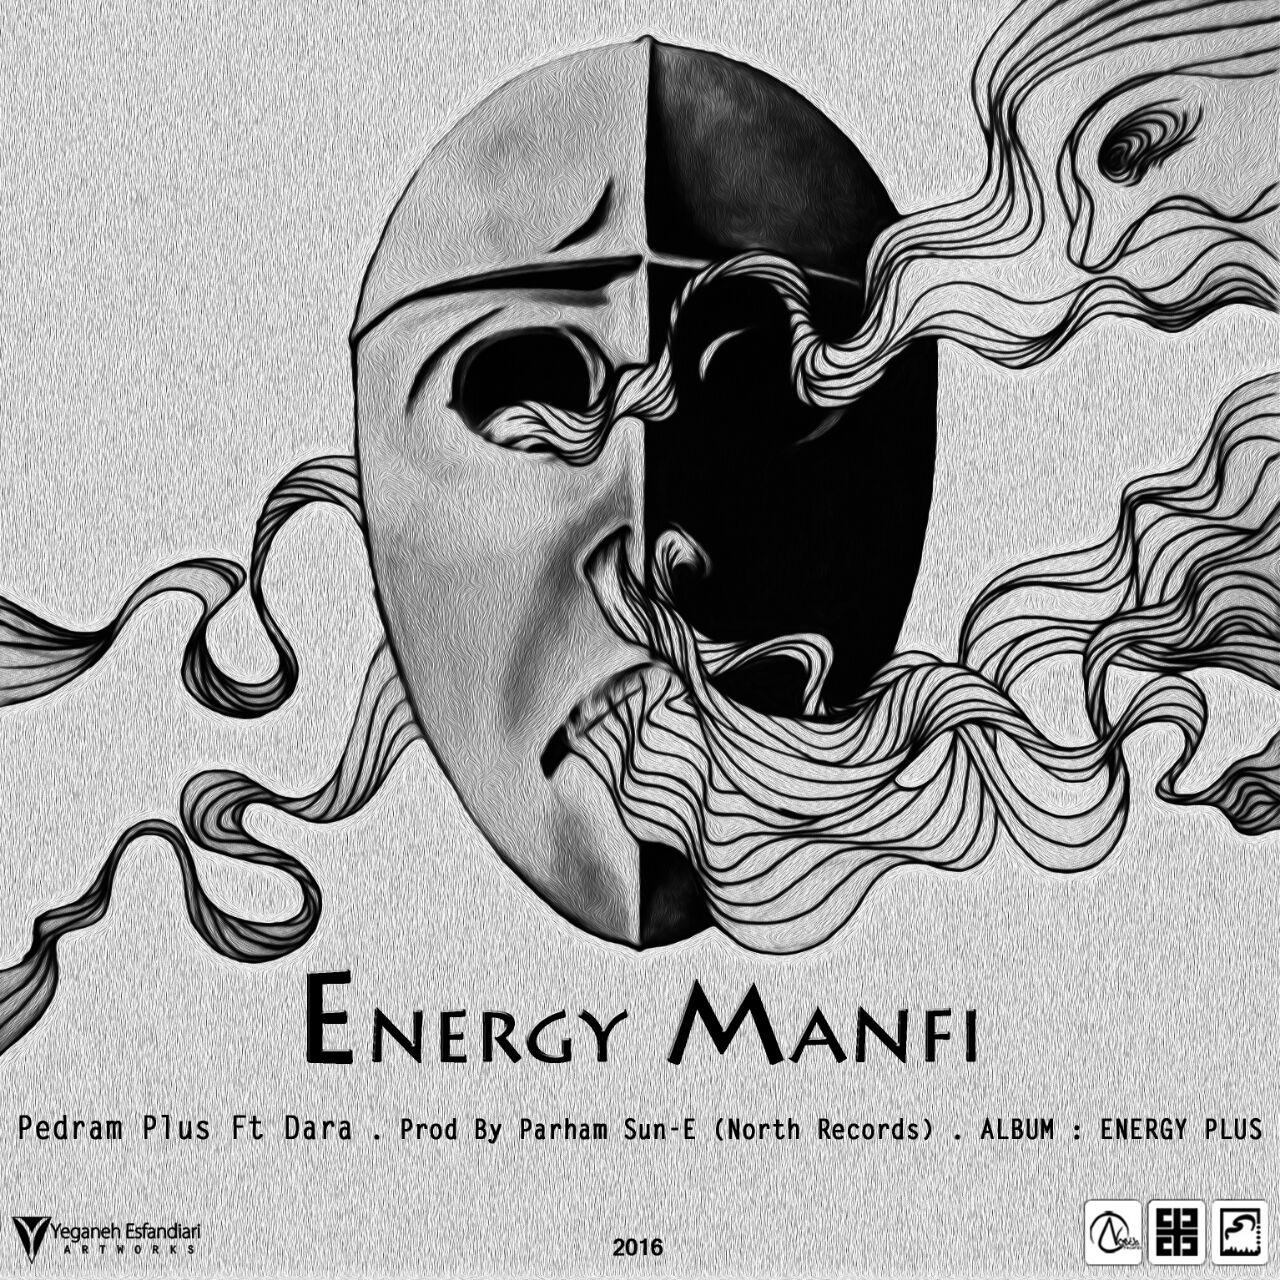  دانلود آهنگ جدید پدرام پلاس - انرژی منفی | Download New Music By Pedram Plus - Energy Manfi (feat. Dara)